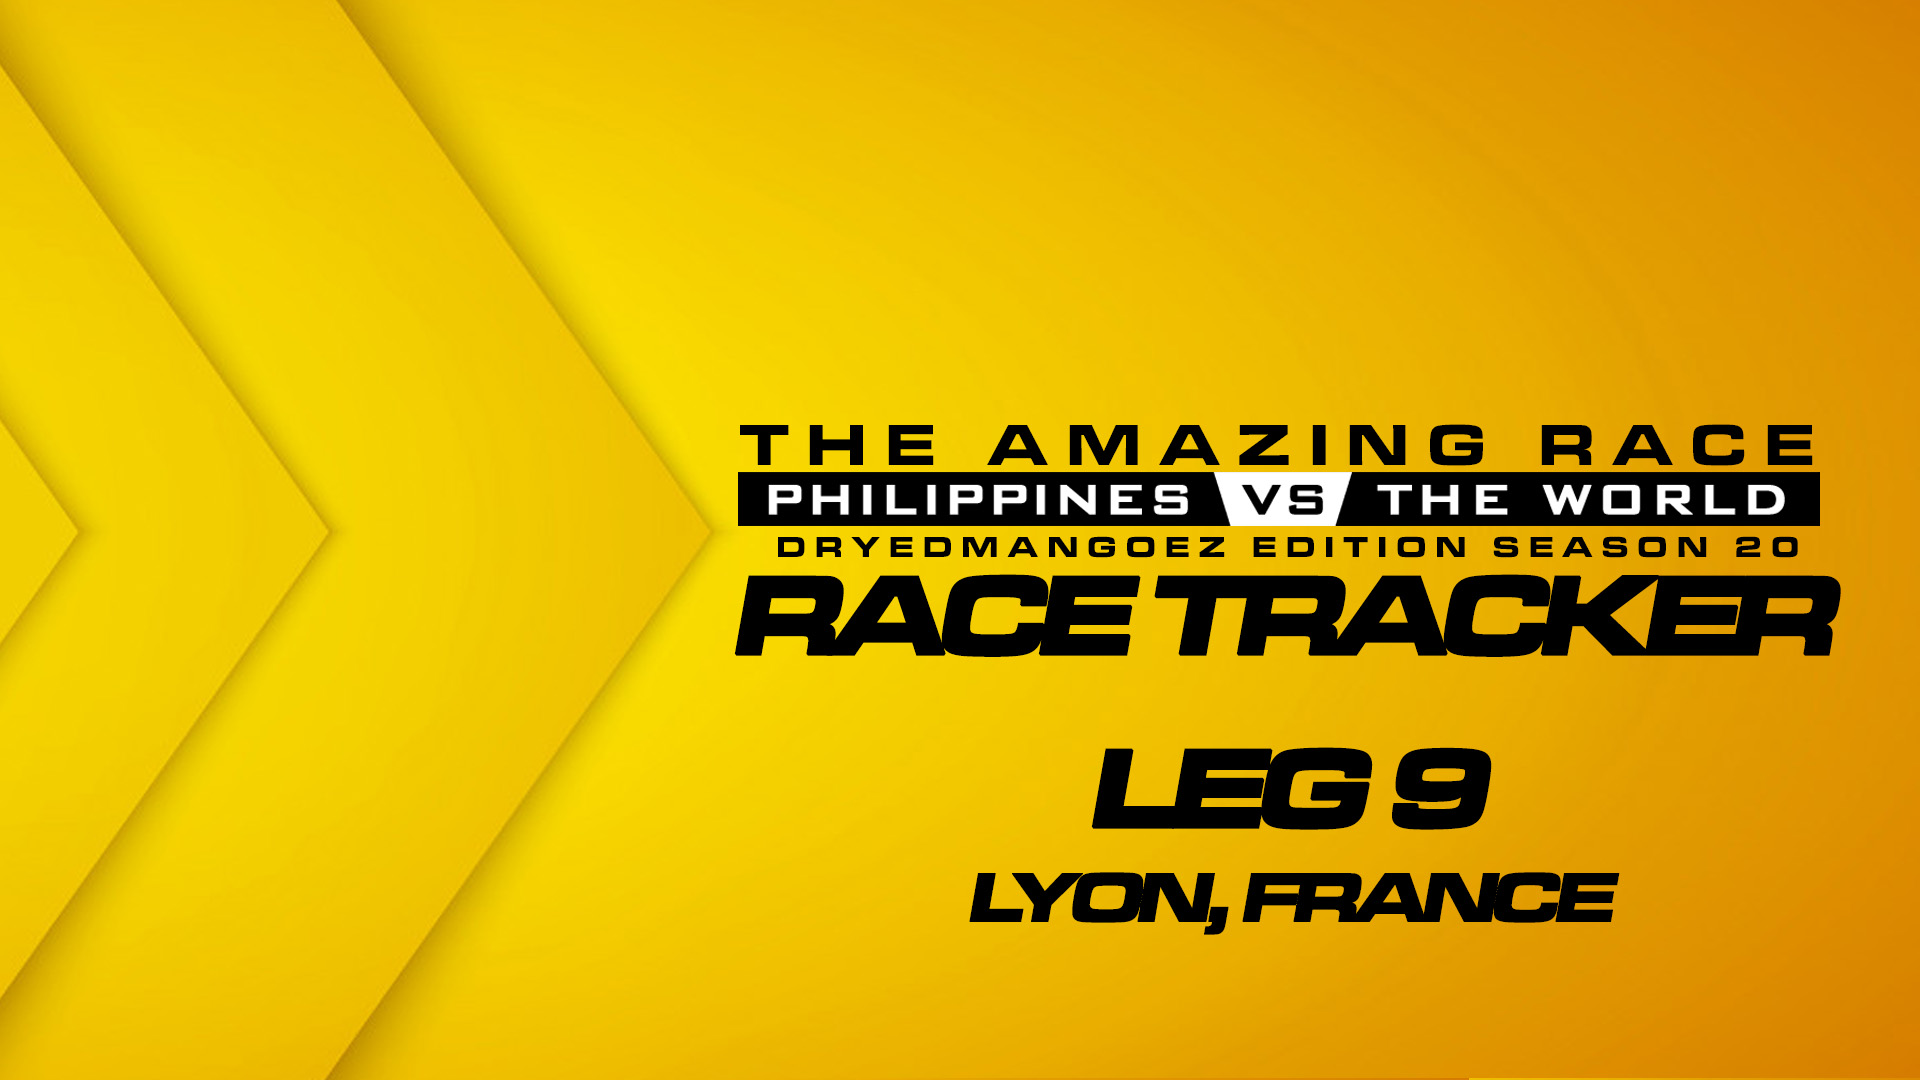 The Amazing Race Philippines vs The World (DryedMangoez Edition Season 20) Race Tracker – Leg 9